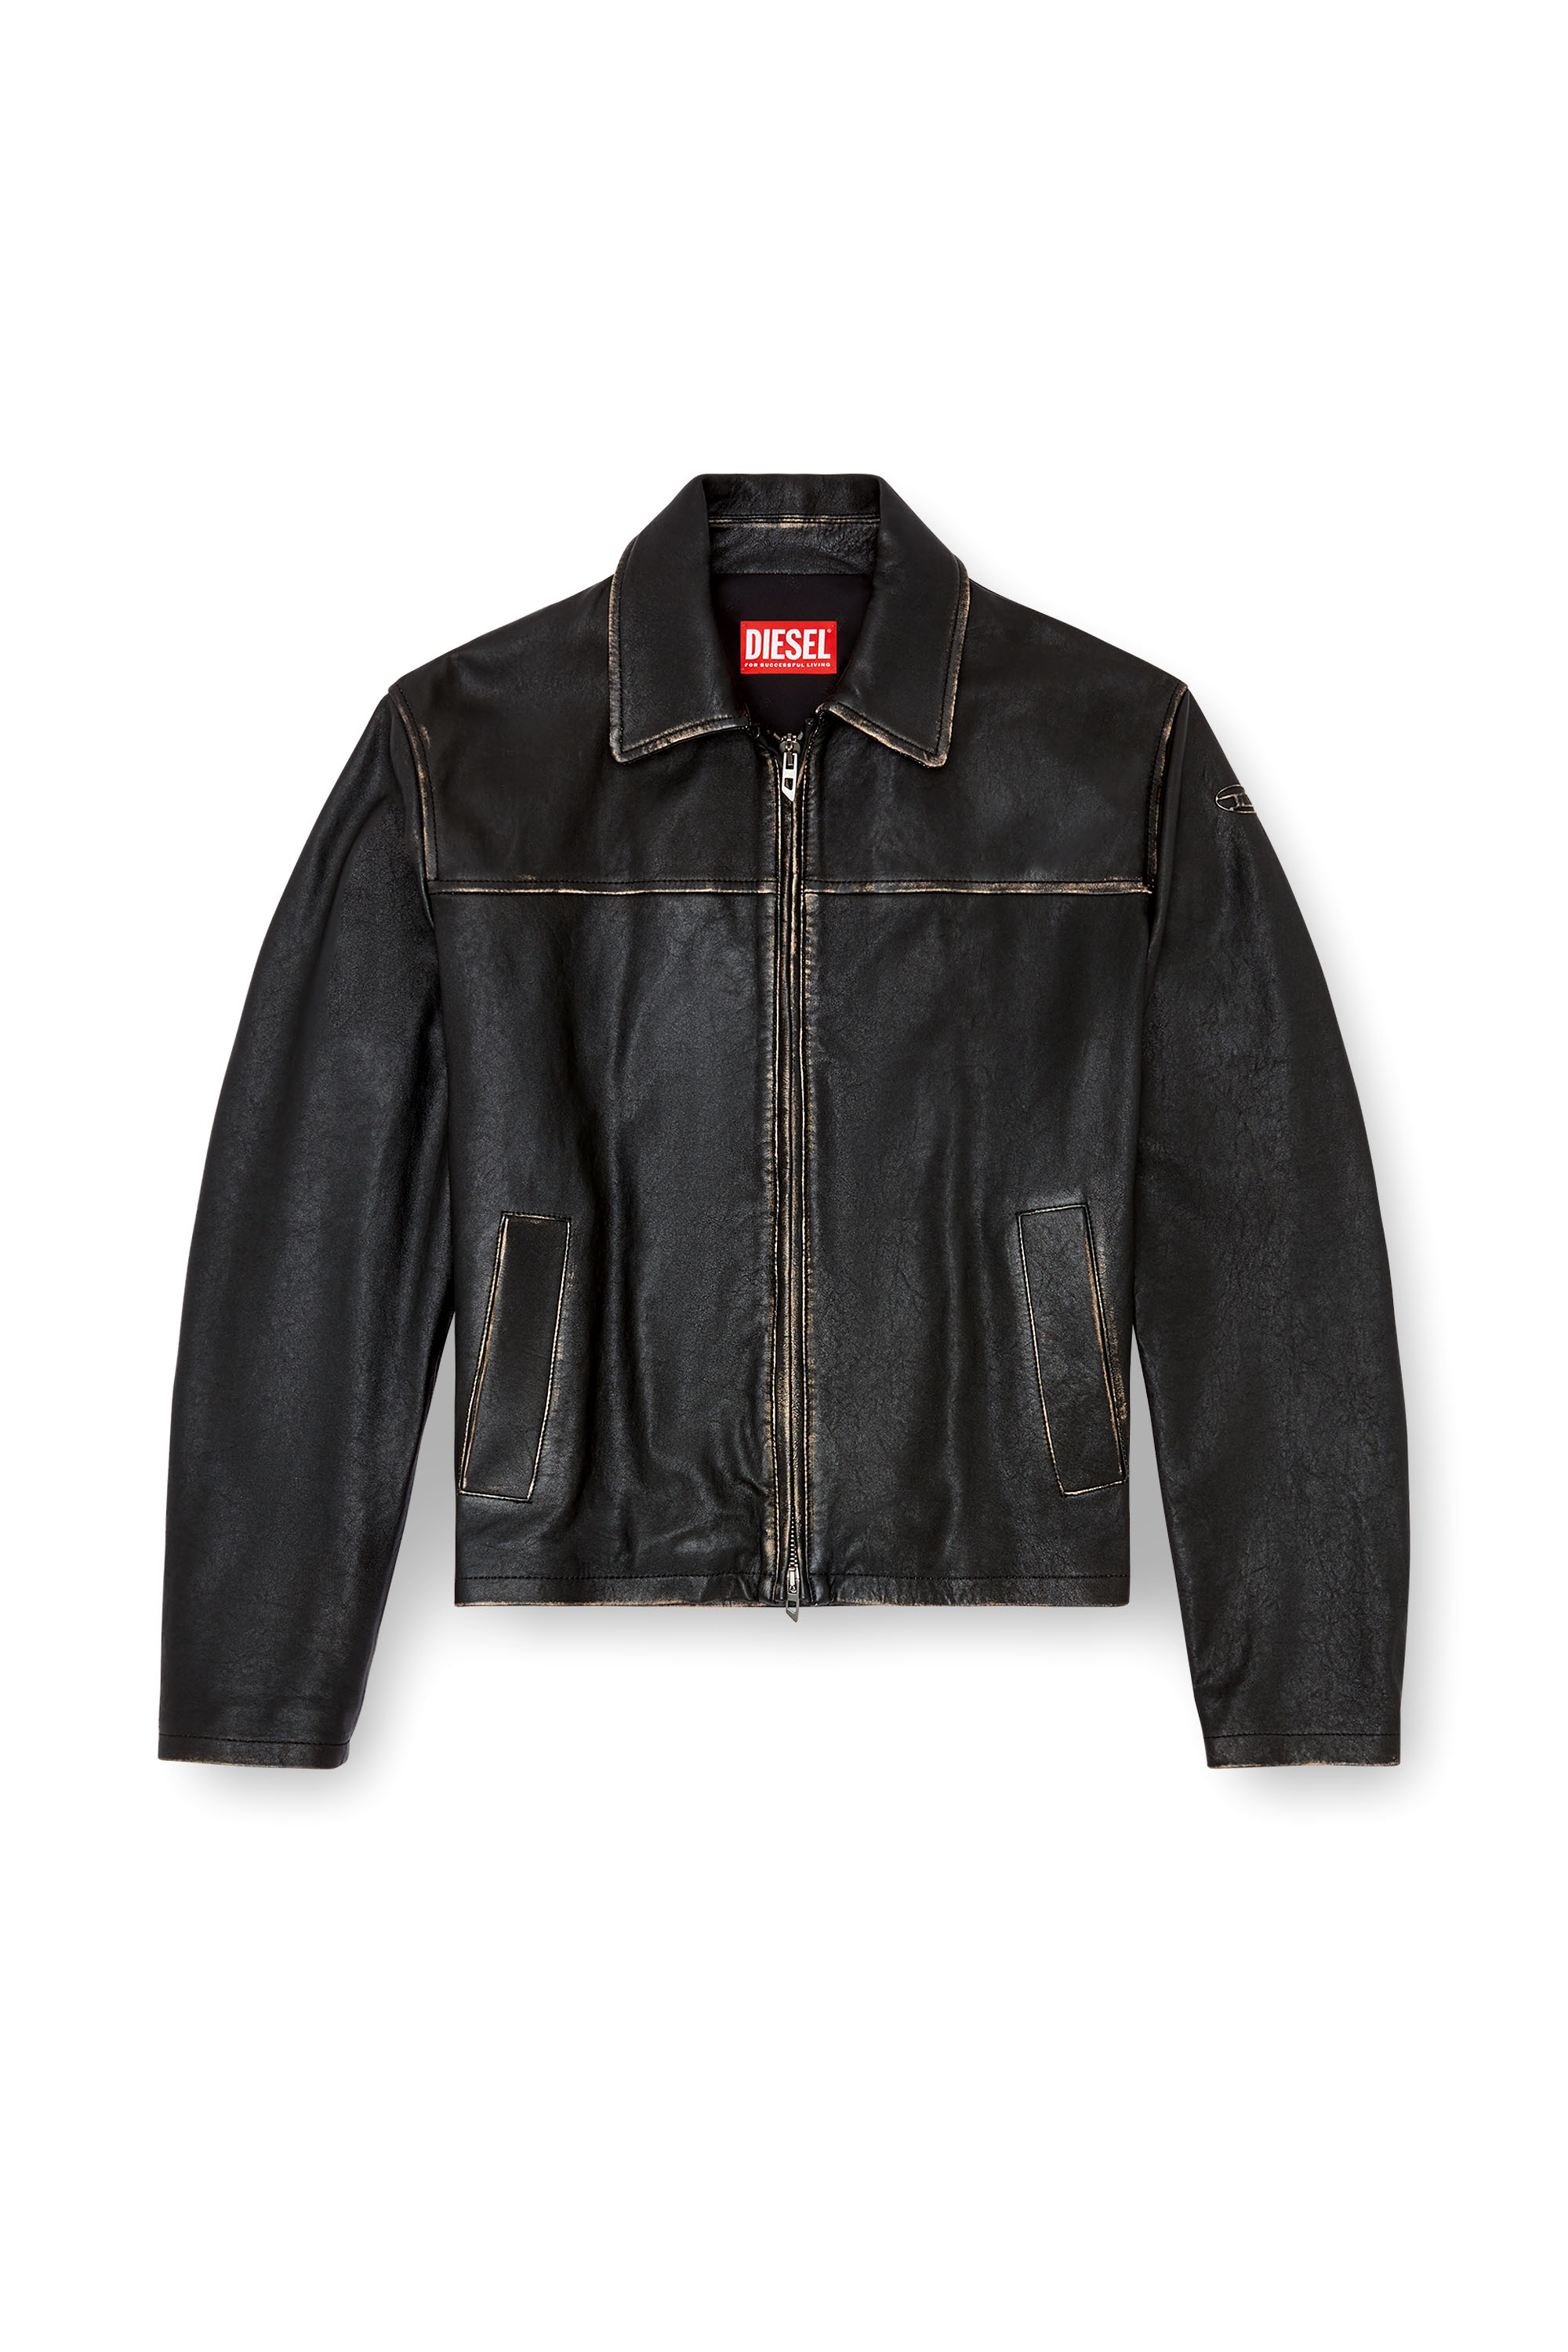 Diesel - L-BLIXIA, Man Distressed leather jacket in Black - Image 3